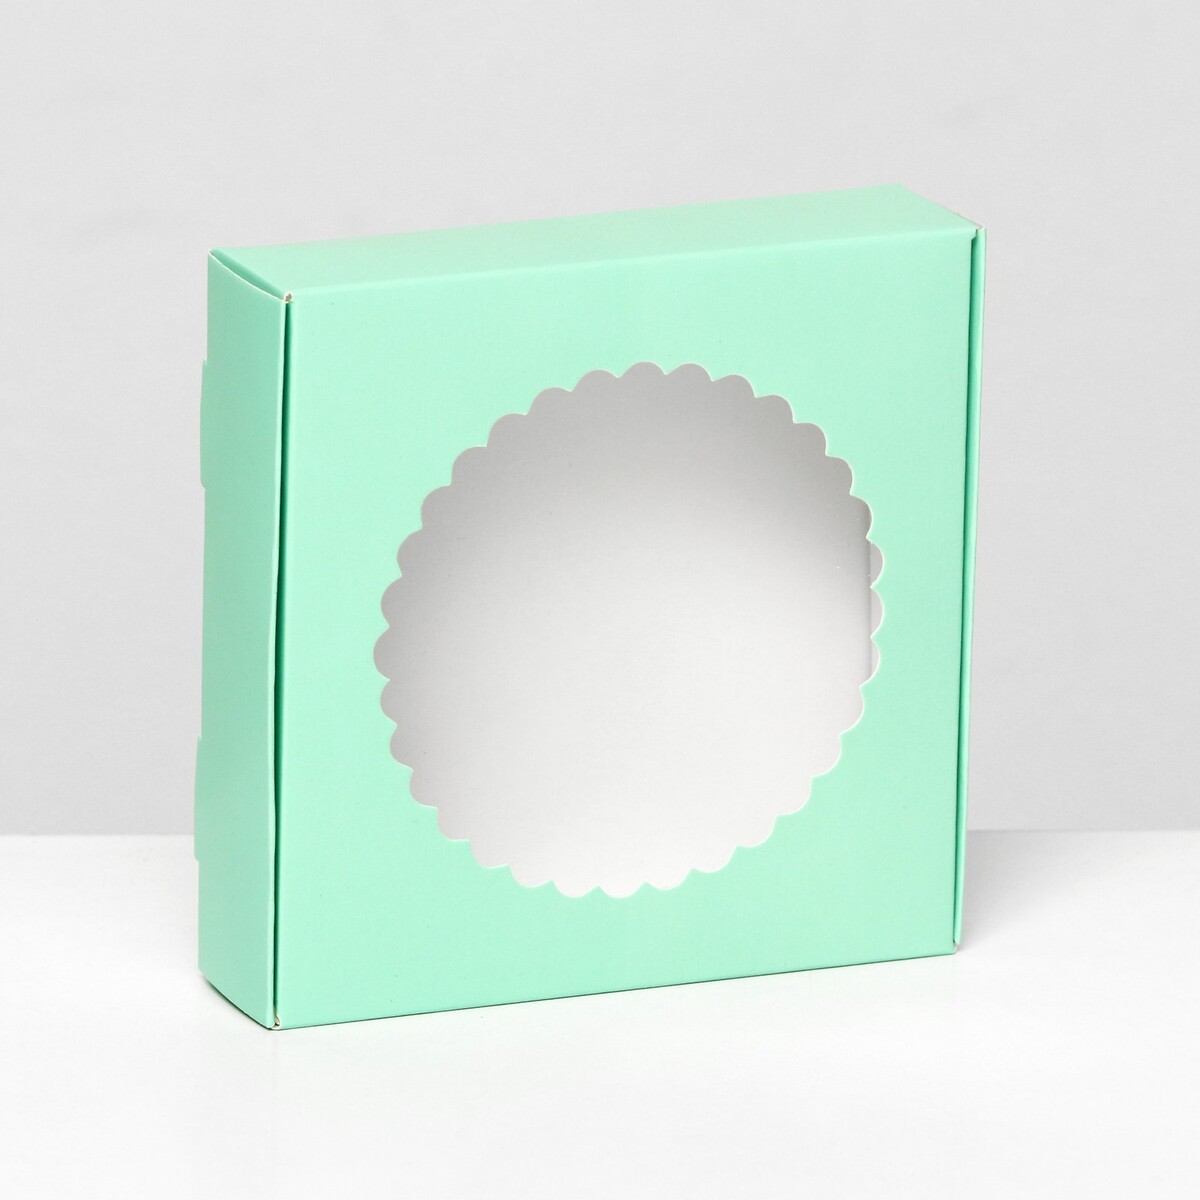 Подарочная коробка сборная с окном, зеленый, 11,5 х 11,5 х 3 см подарочная коробка сборная с окном 11 5 х 11 5 х 3 см алый